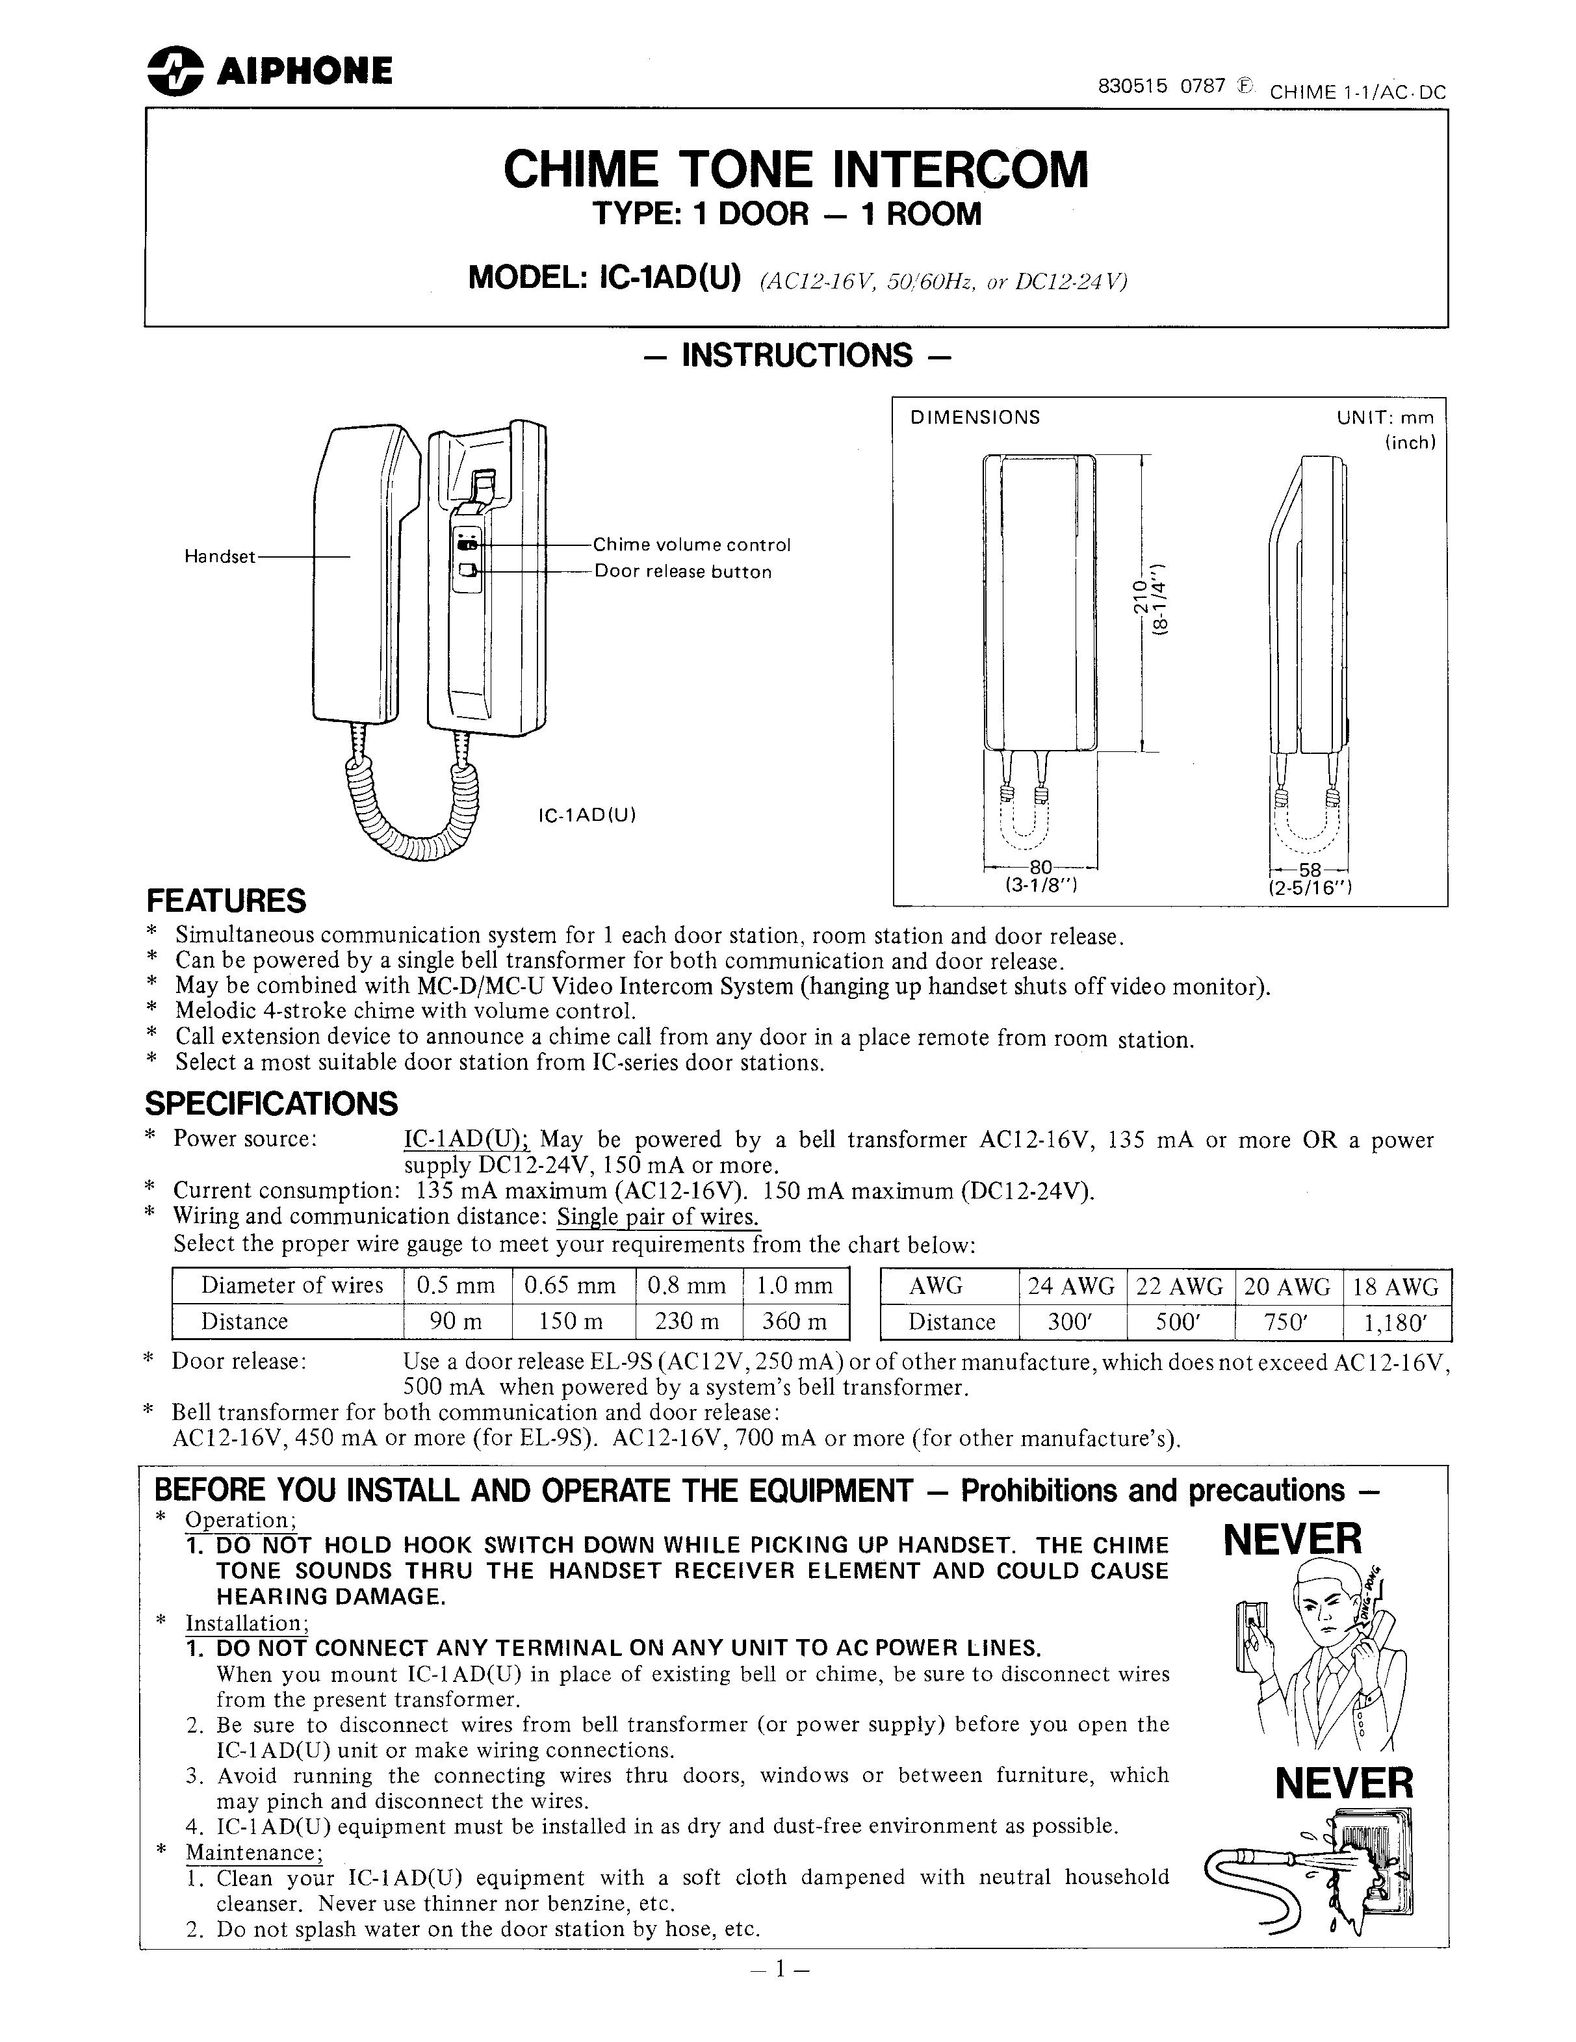 Aiphone IC-1AD Telephone User Manual